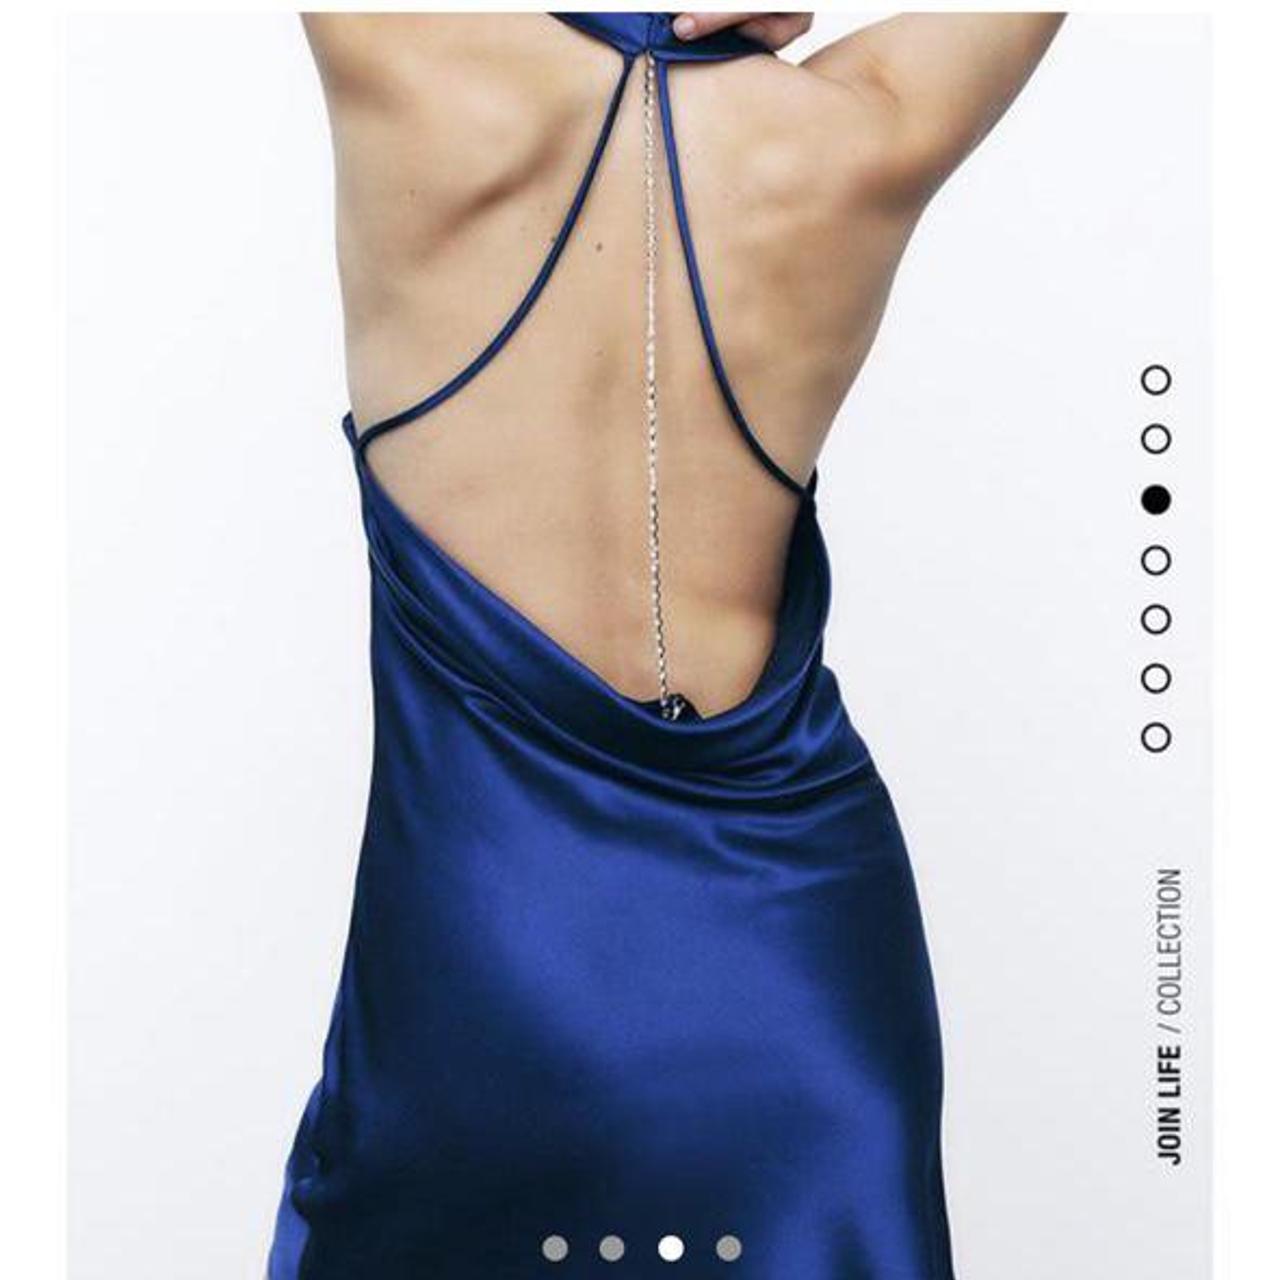 Zara Cobalt Royal Blue dress with ...